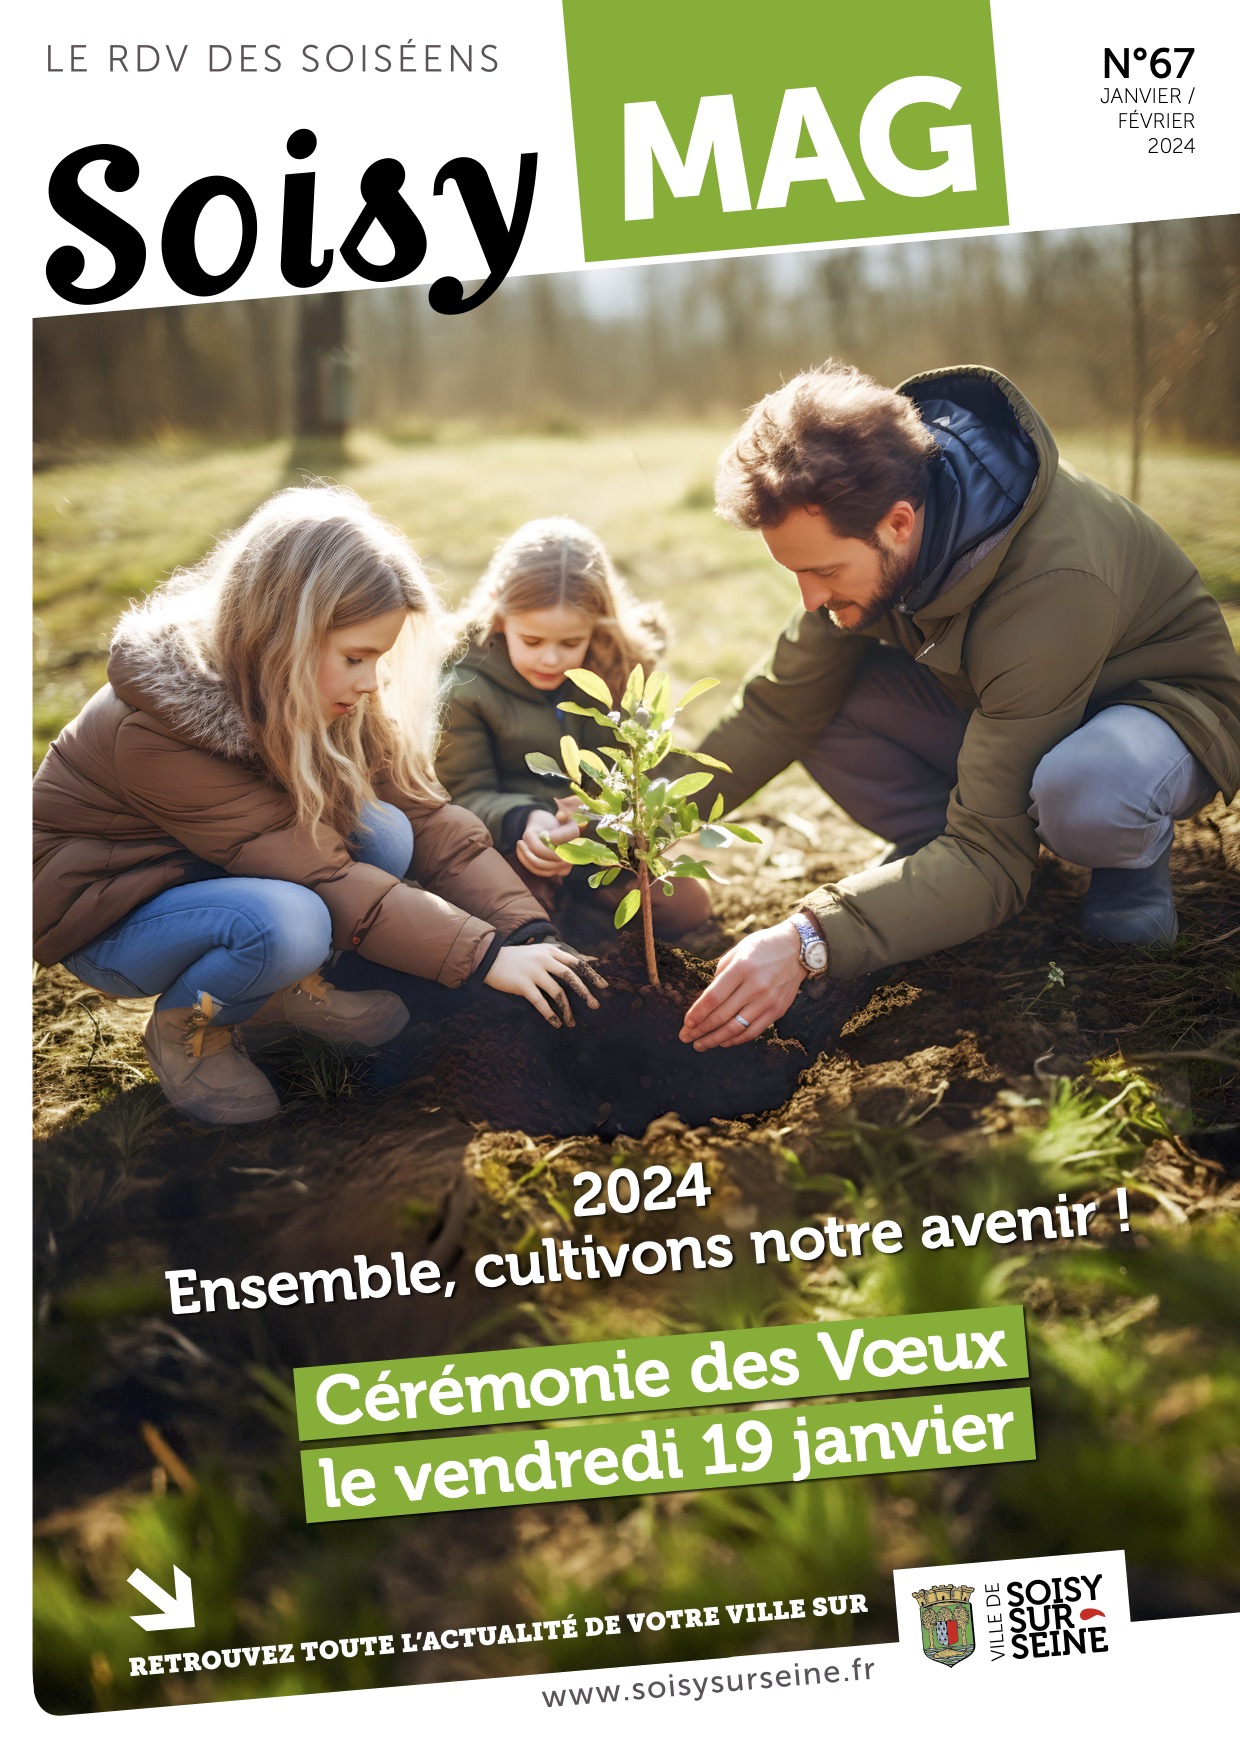 Soisy mag n°67 - Janvier Février 2024